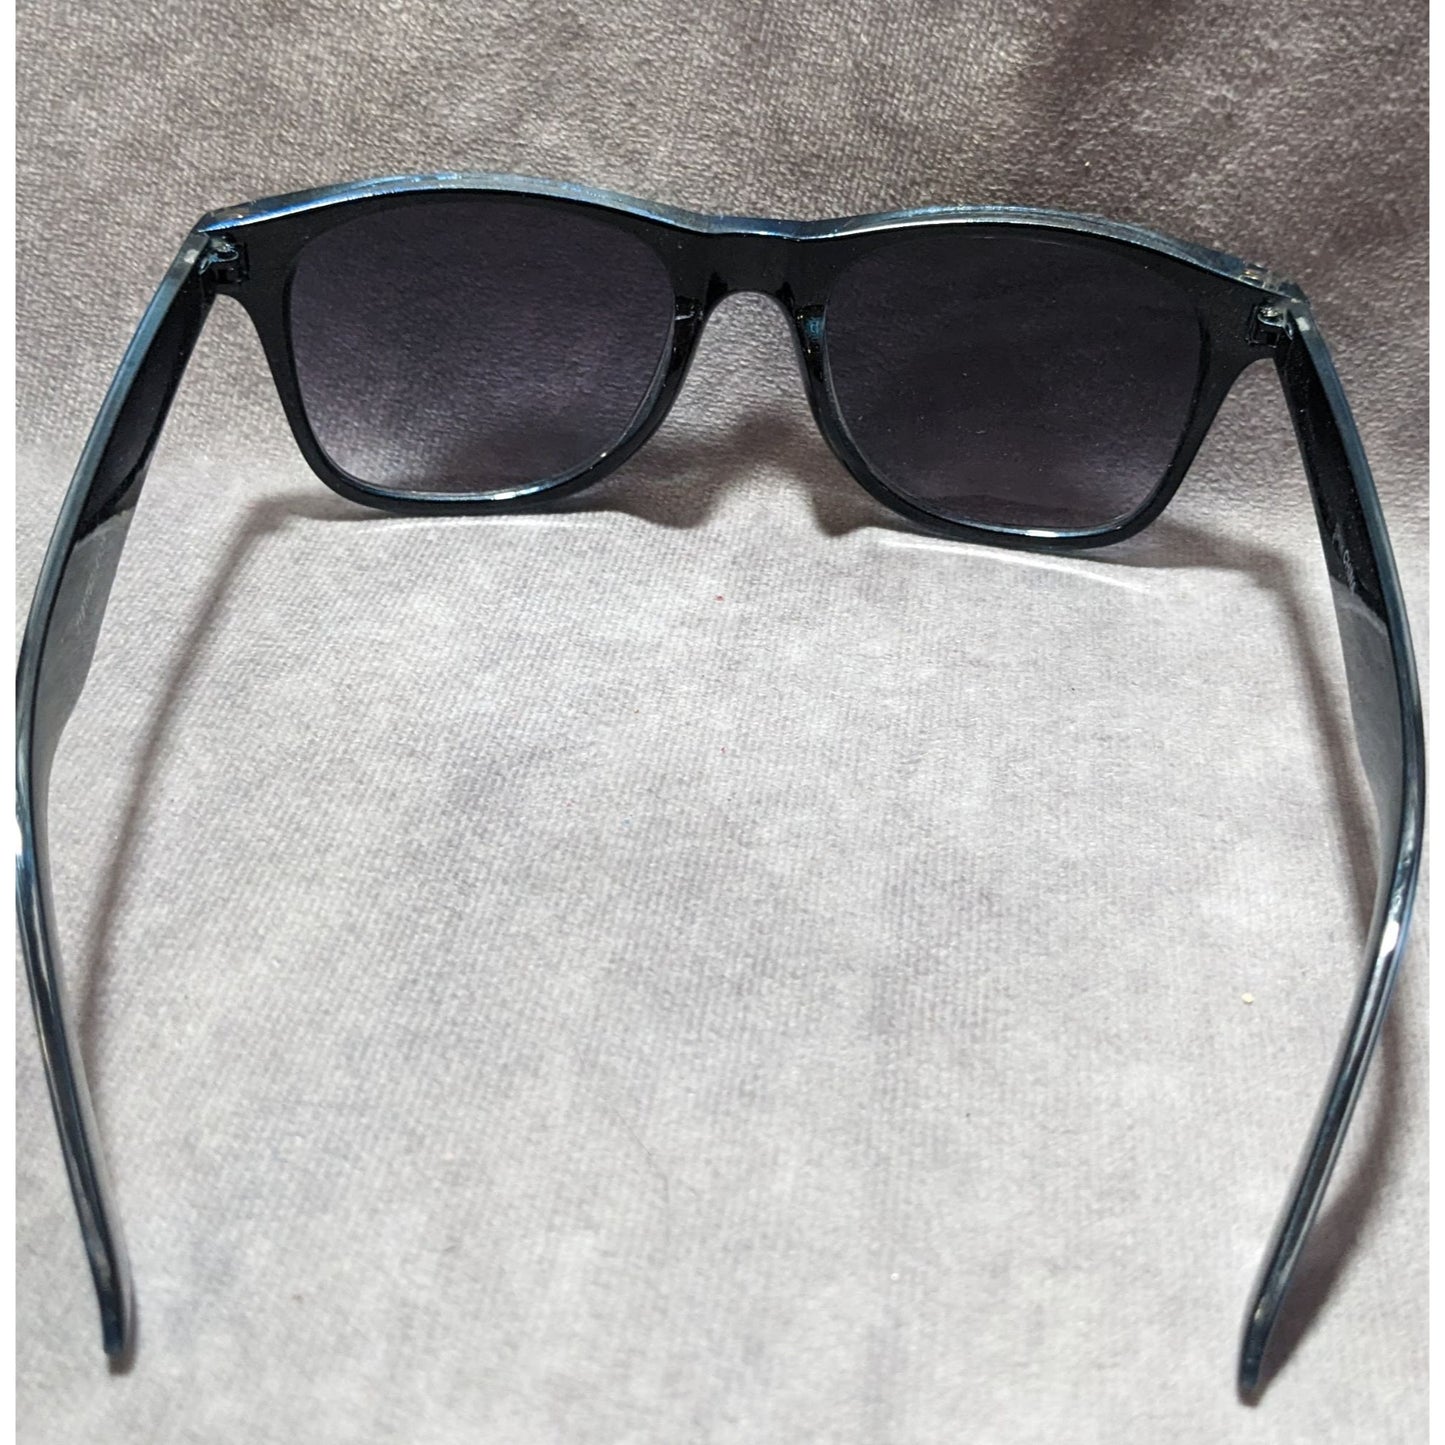 Metallic Blue Sunglasses